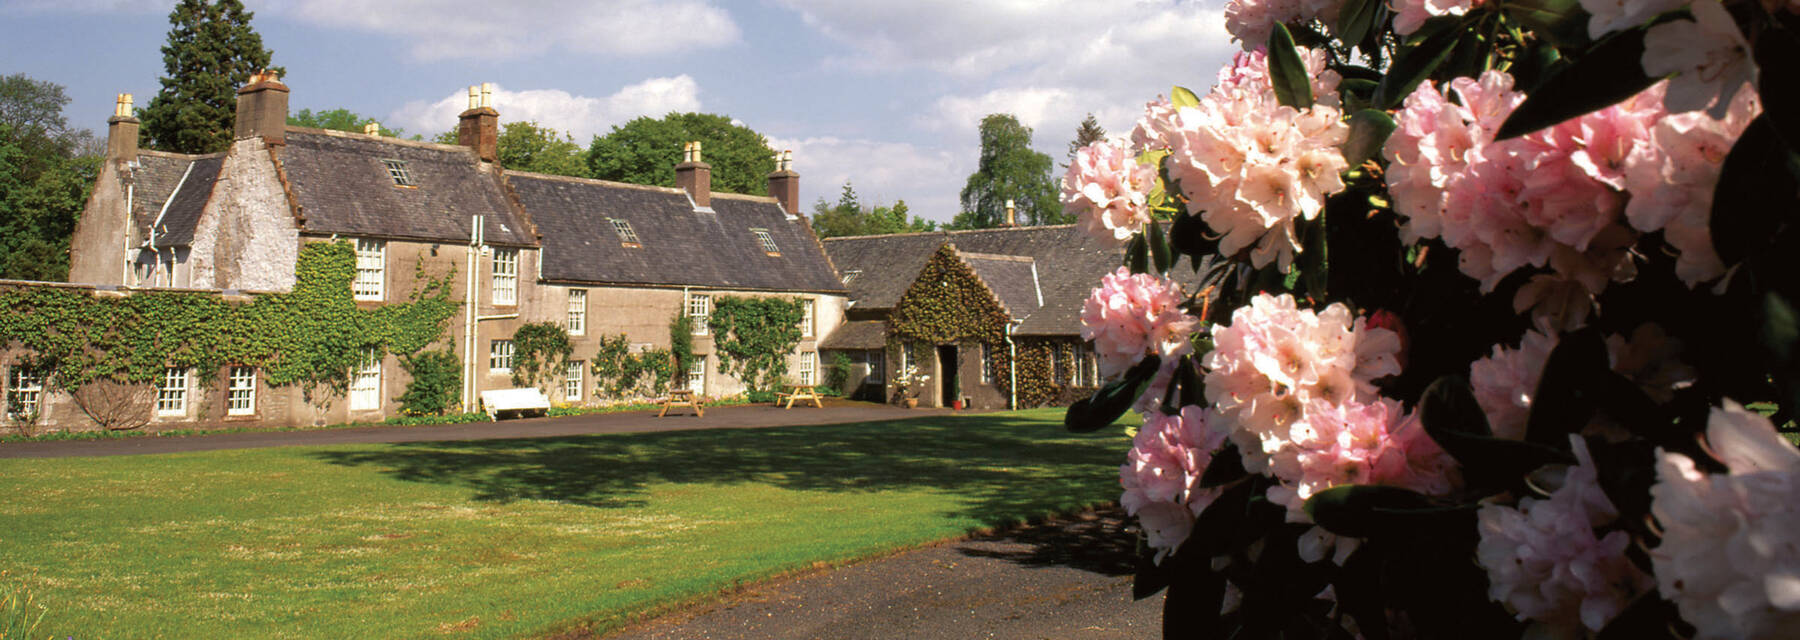 Geilston Garden house and rhododendron bush